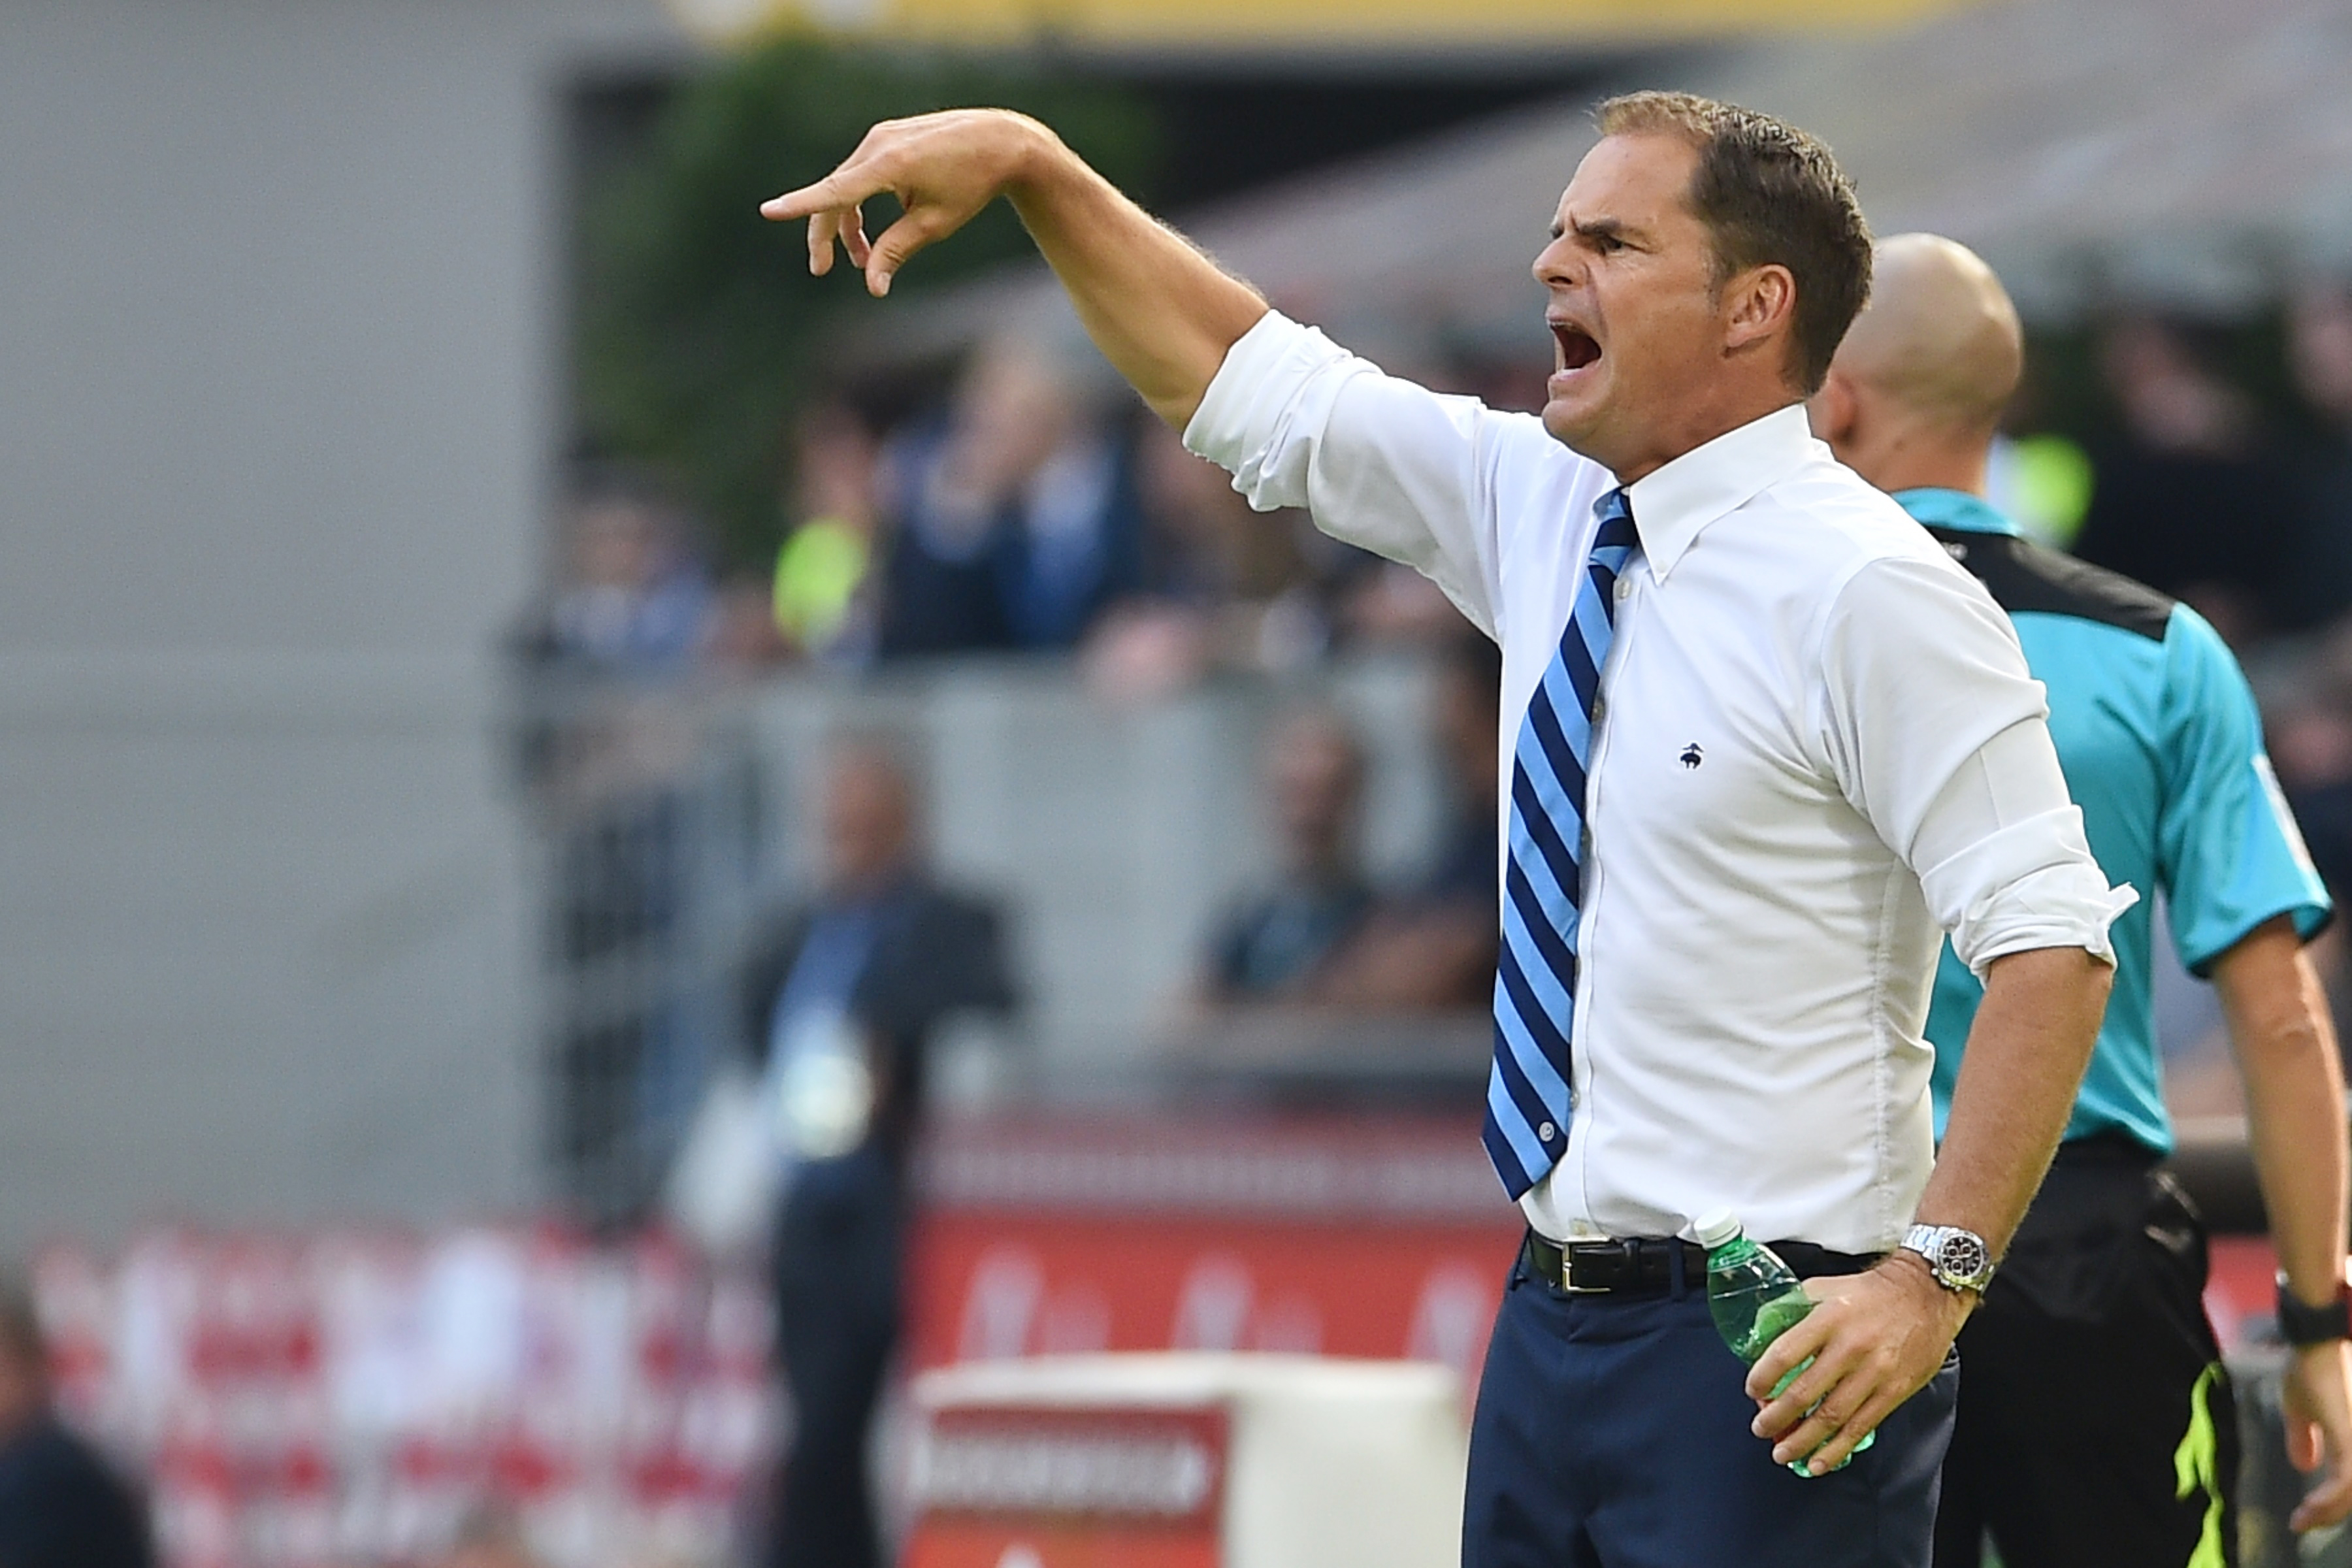 Sam Olsen – De Boer is the man this Inter needs